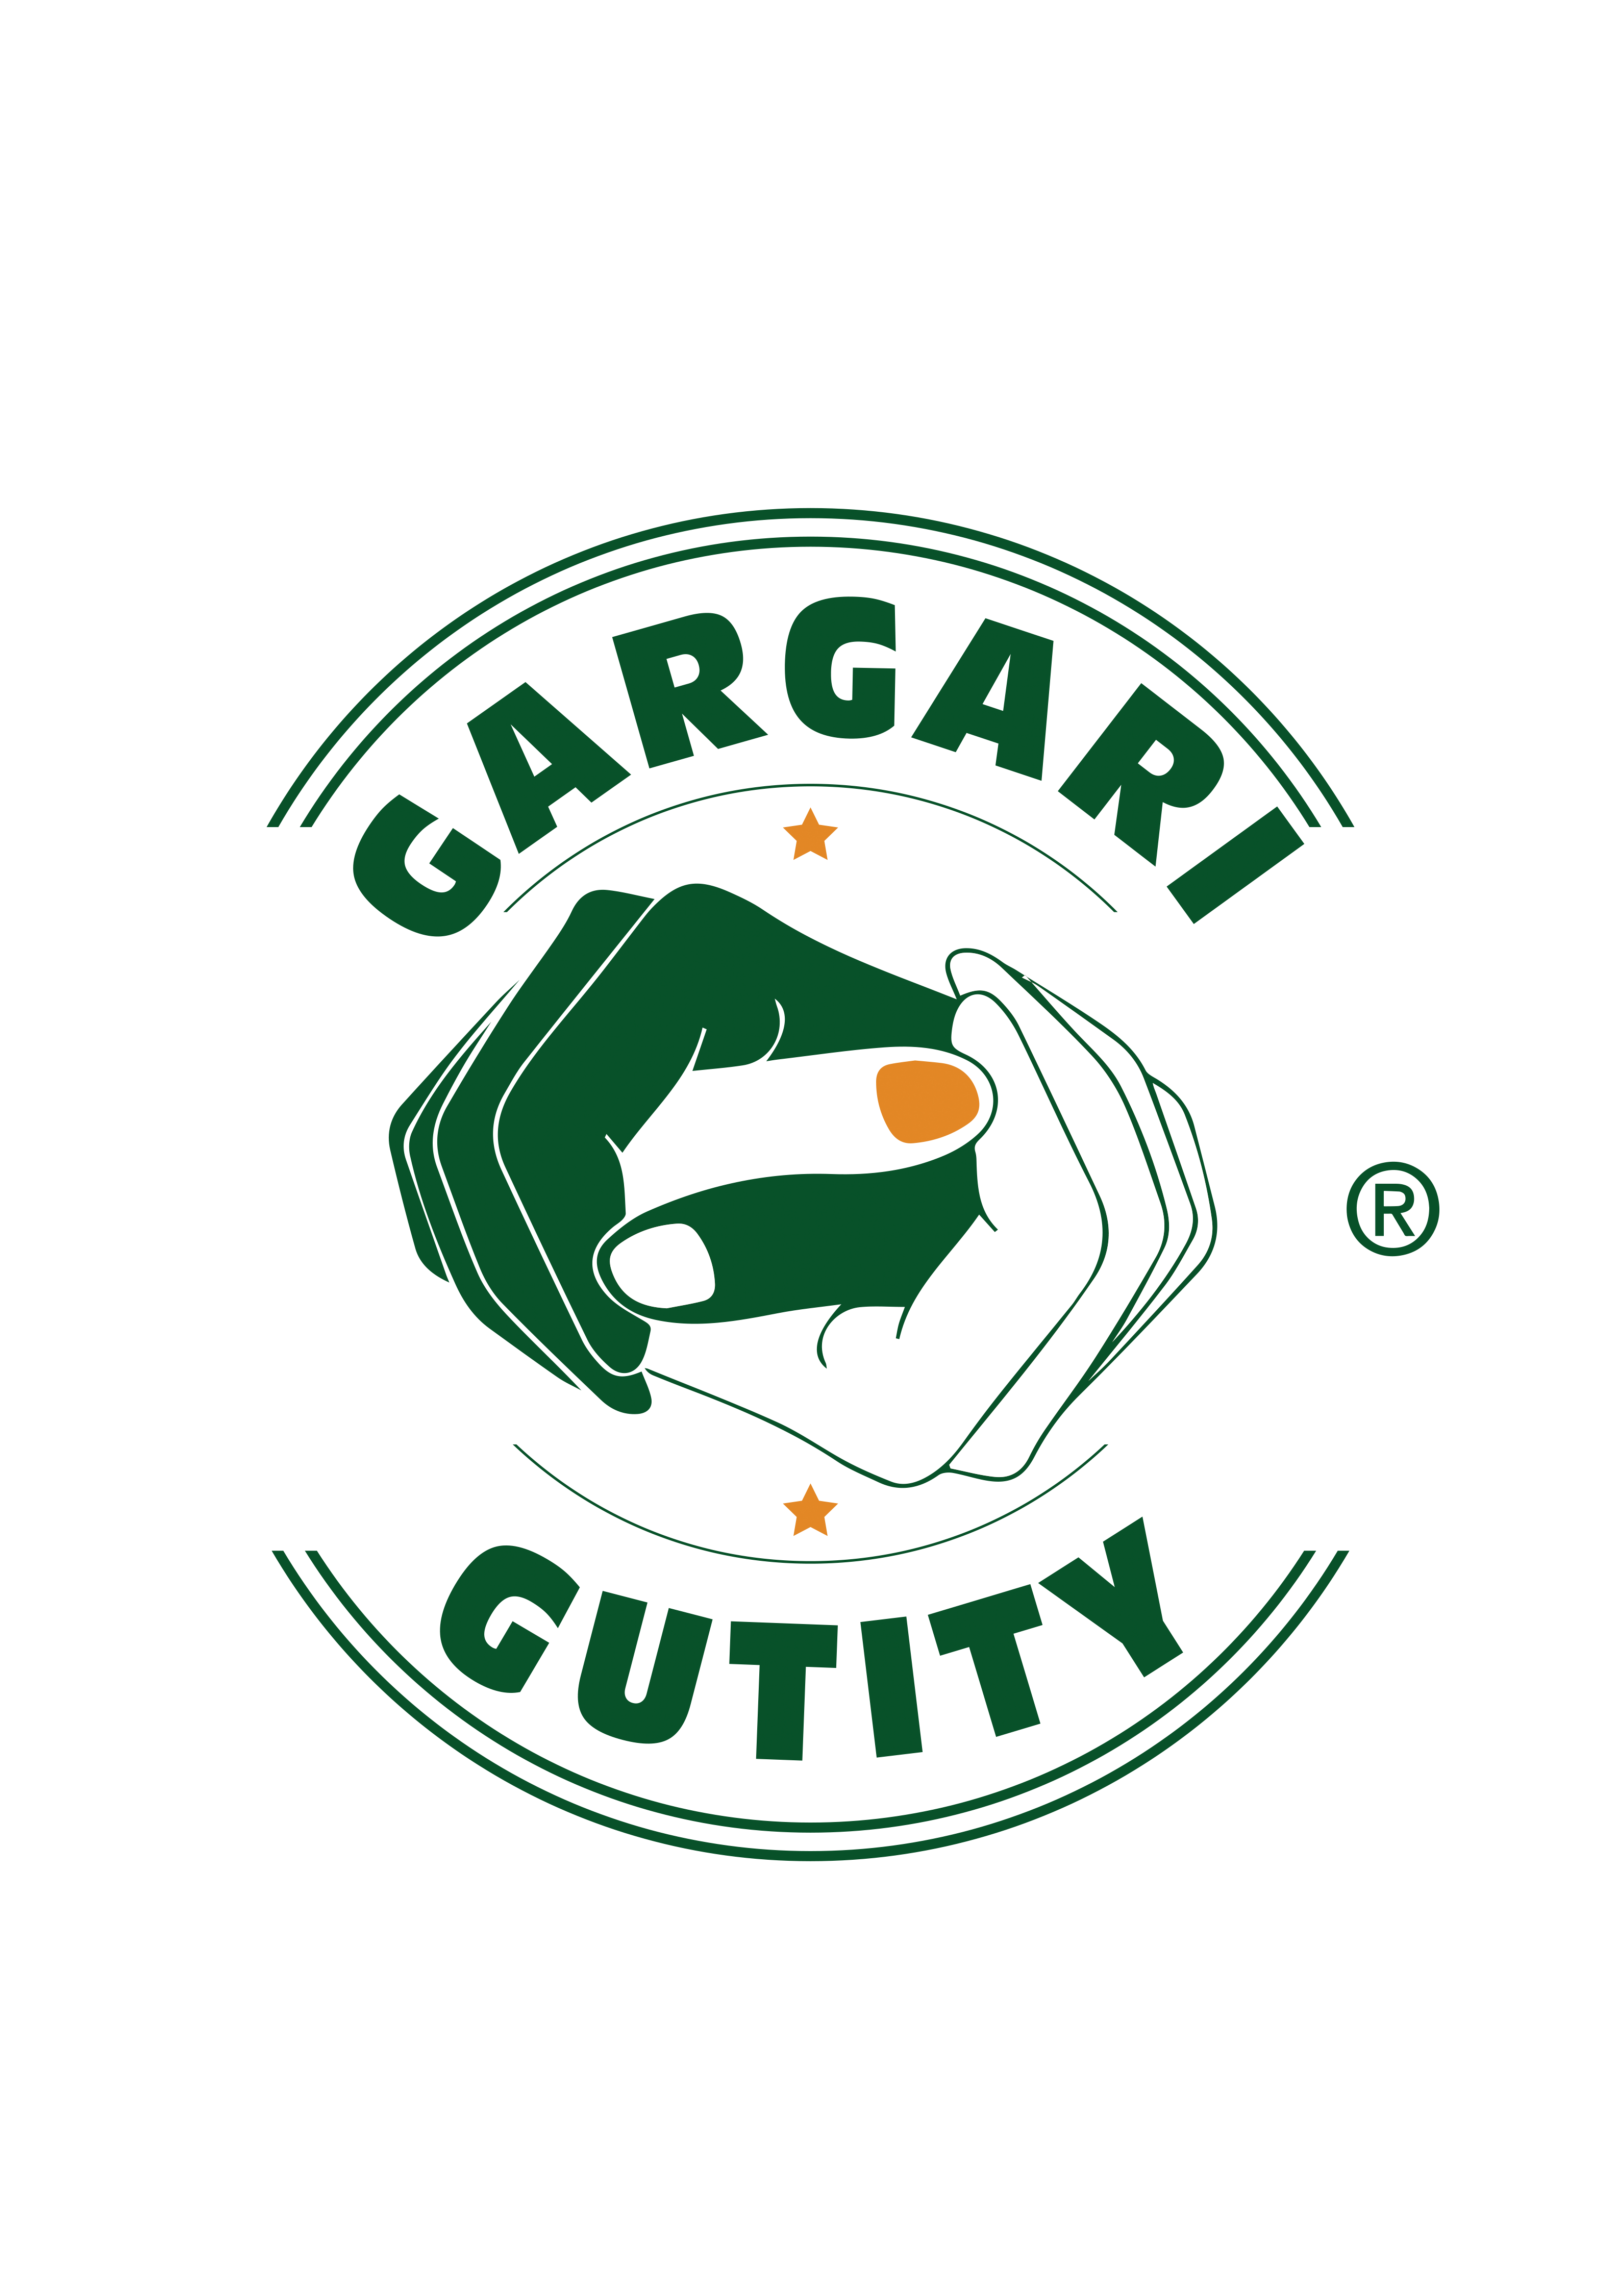 Anaerobic Gargari Gutity 105RR